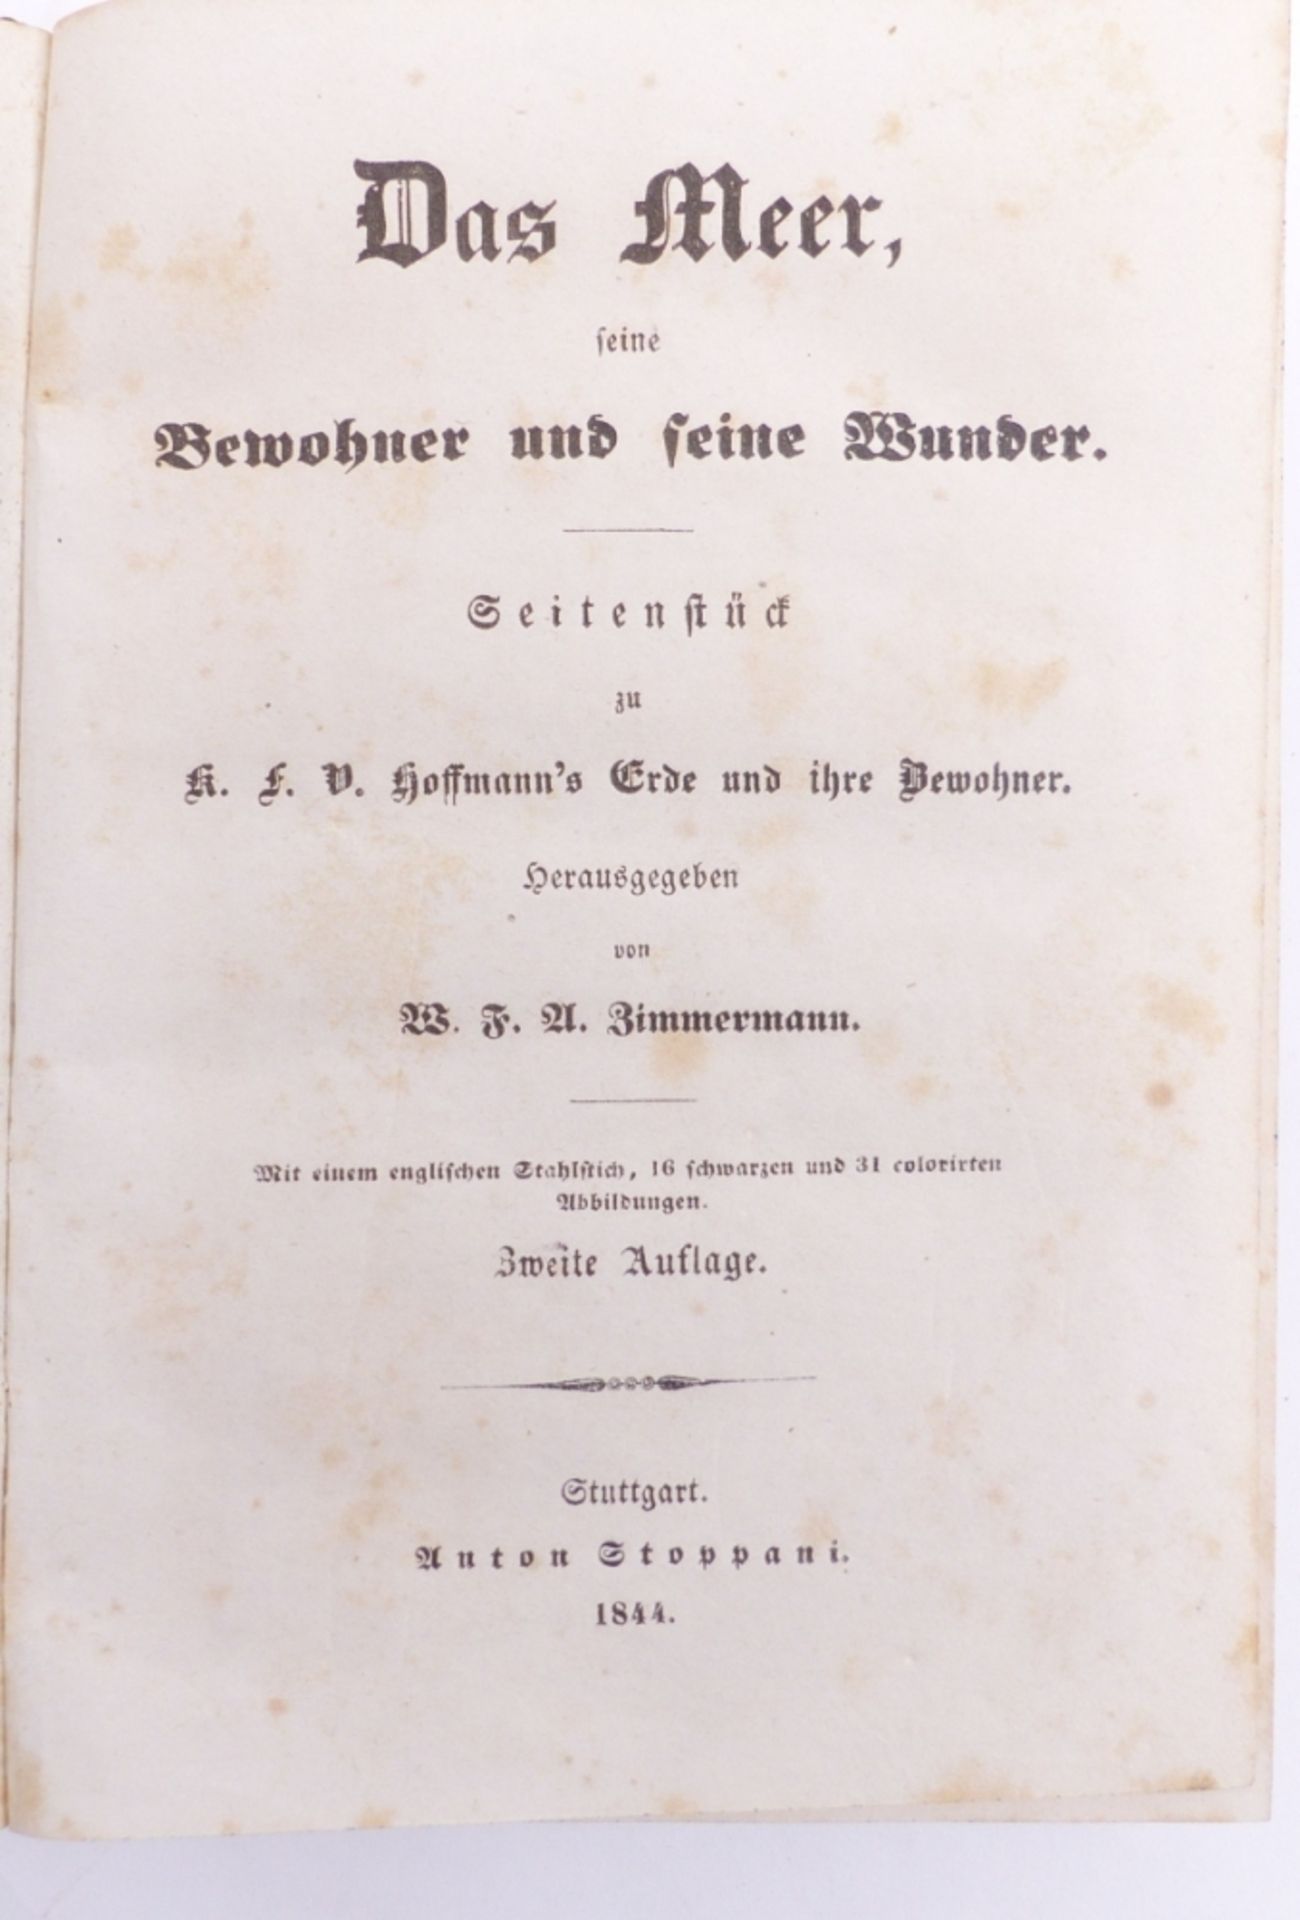 Zimmermann, W. F. A. (Hg.) (= C. G. W. Vollmer) - Image 4 of 6